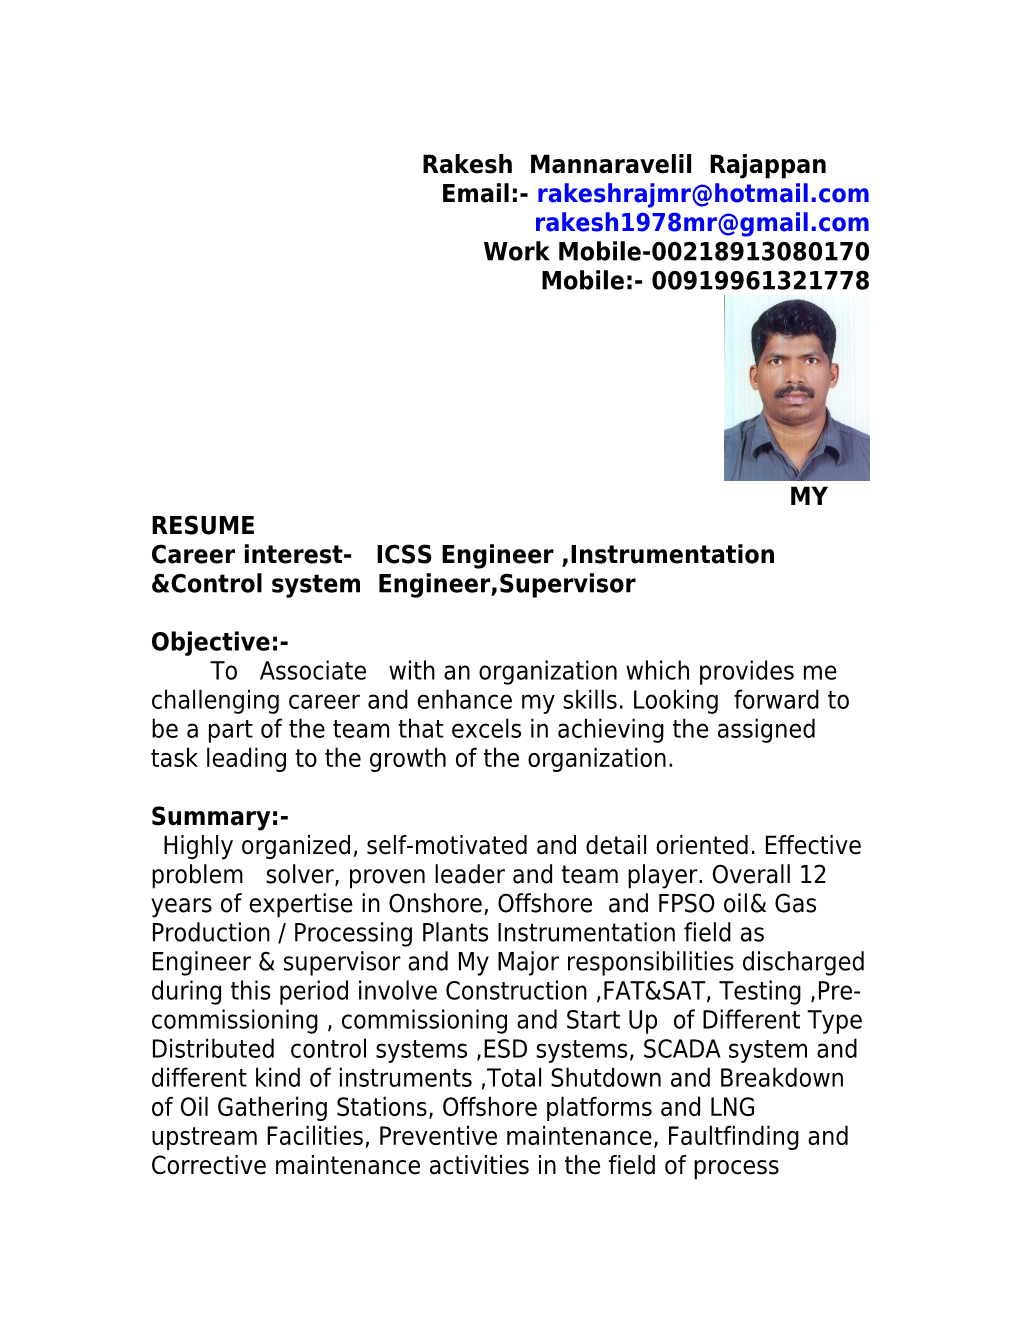 Career Interest- ICSS Engineer ,Instrumentation Control System Engineer,Supervisor